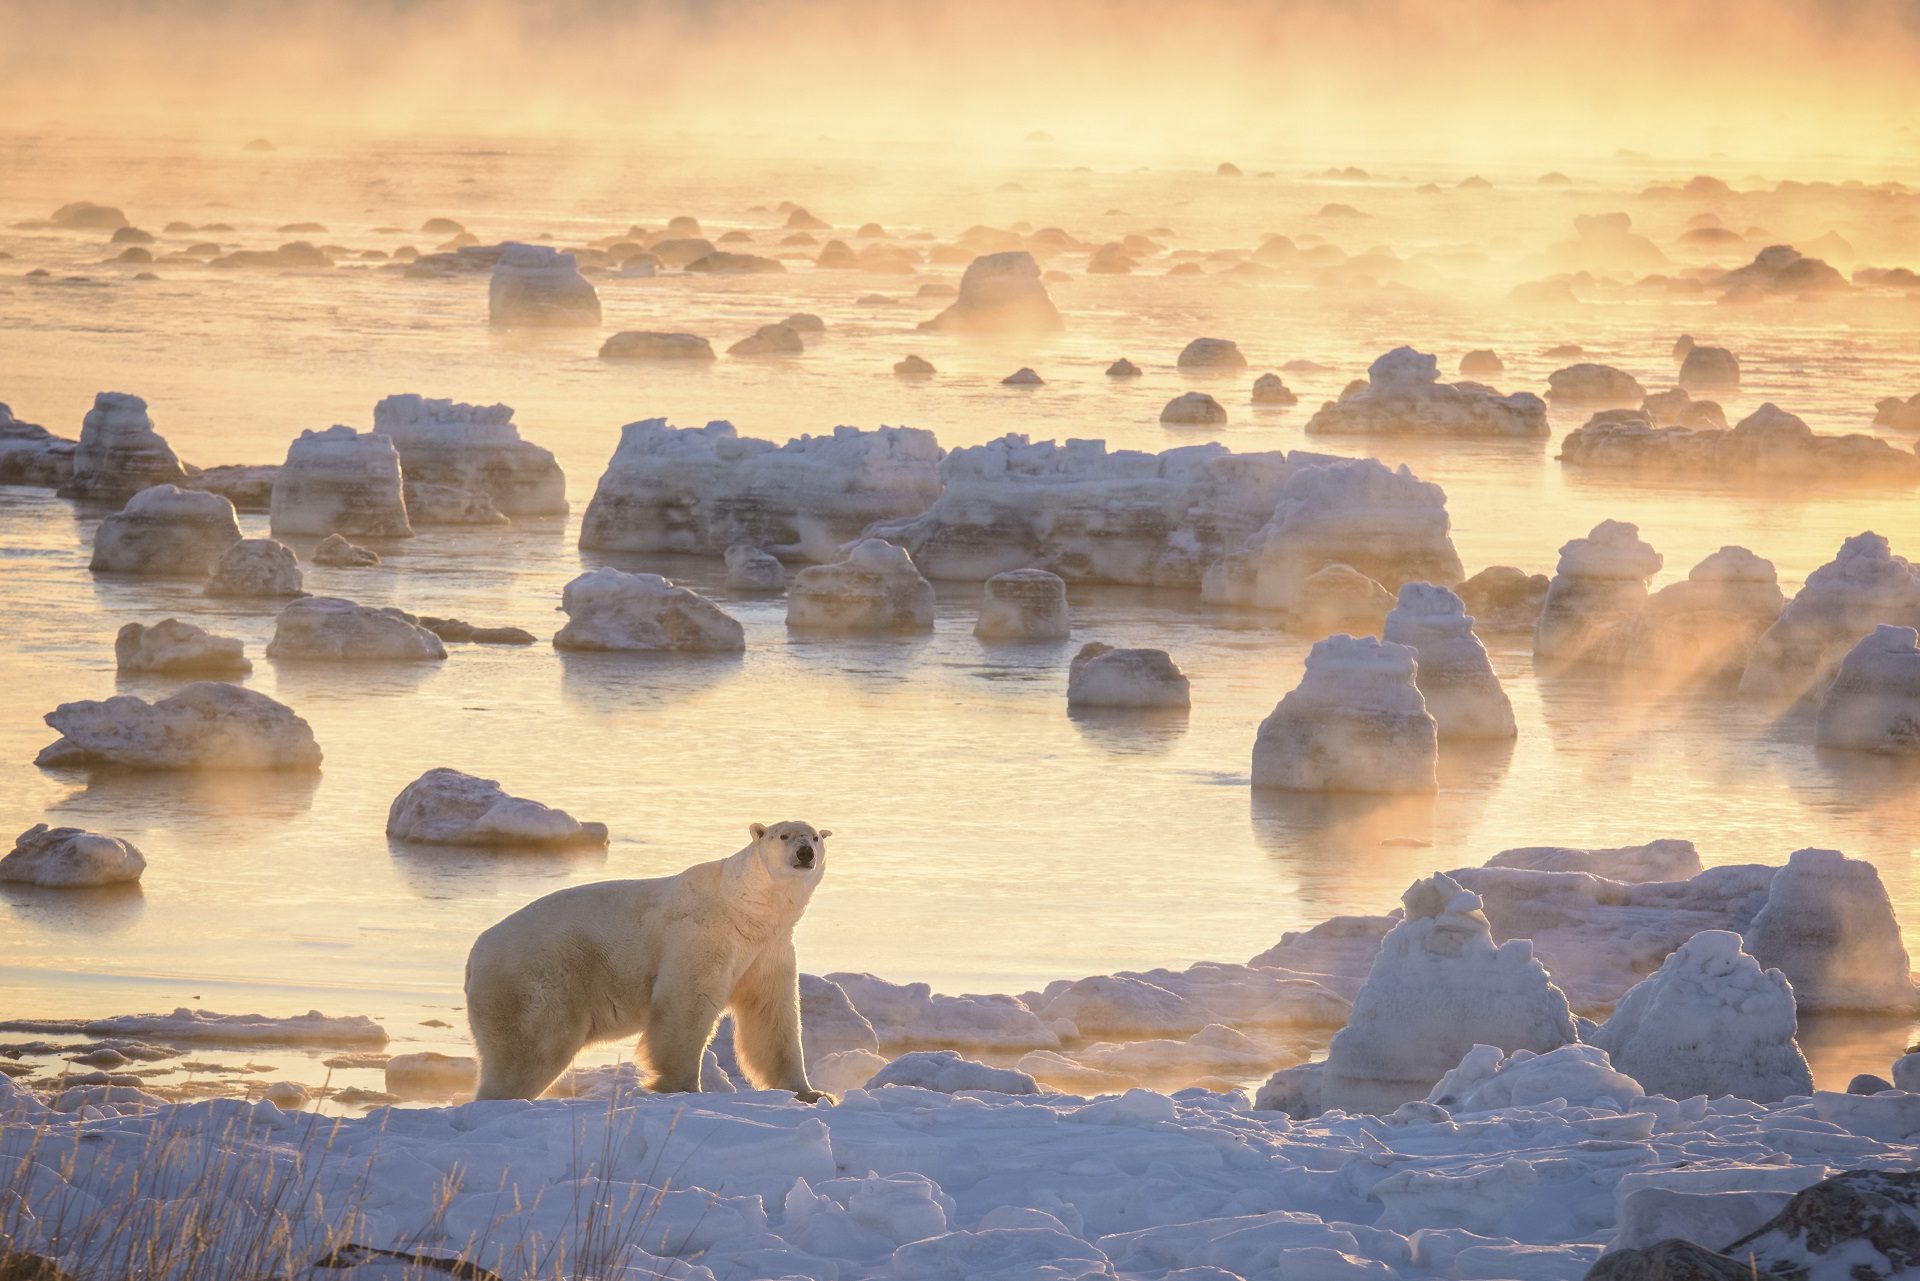 Polar bear in ice fog on the Polar Bear Photo Safari at Seal River Heritage Lodge. Rick Beldegreen photo.